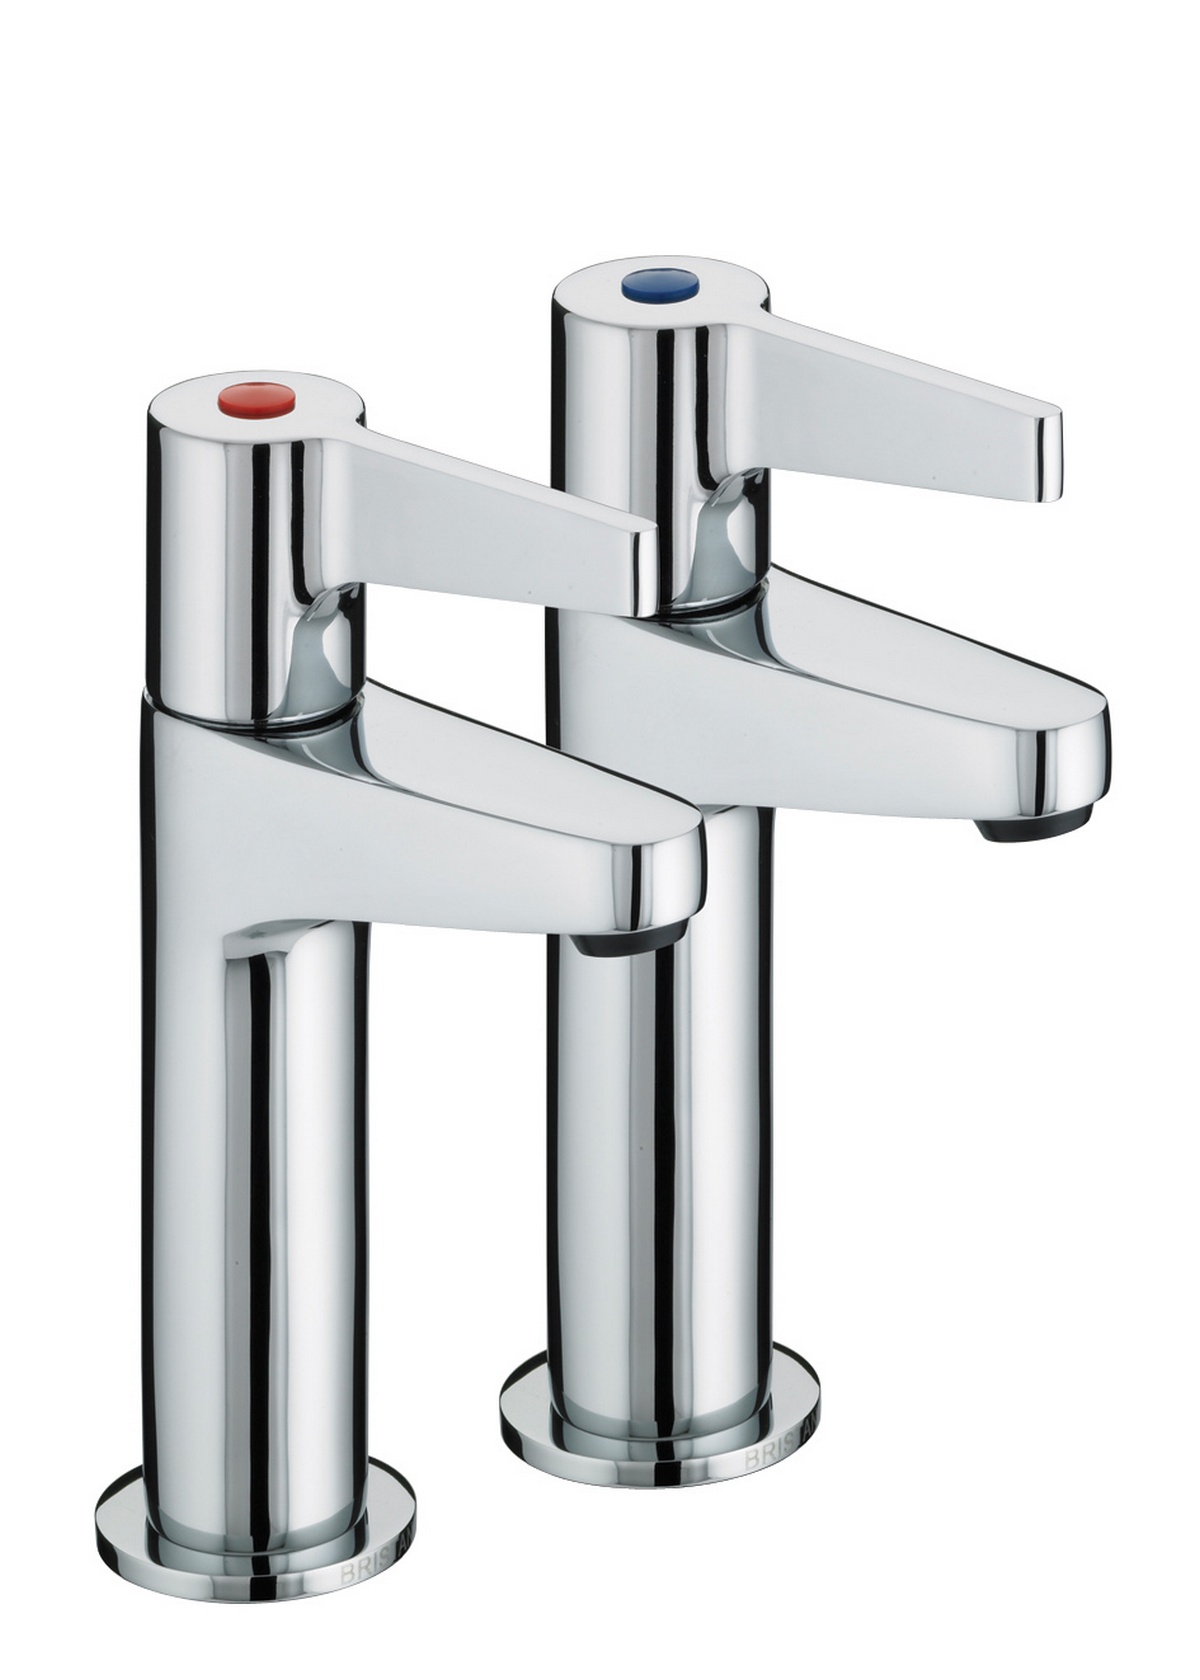 Bristan Design Utility Kitchen Sink Lever Taps Pair - Chrome - DUL HNK C 